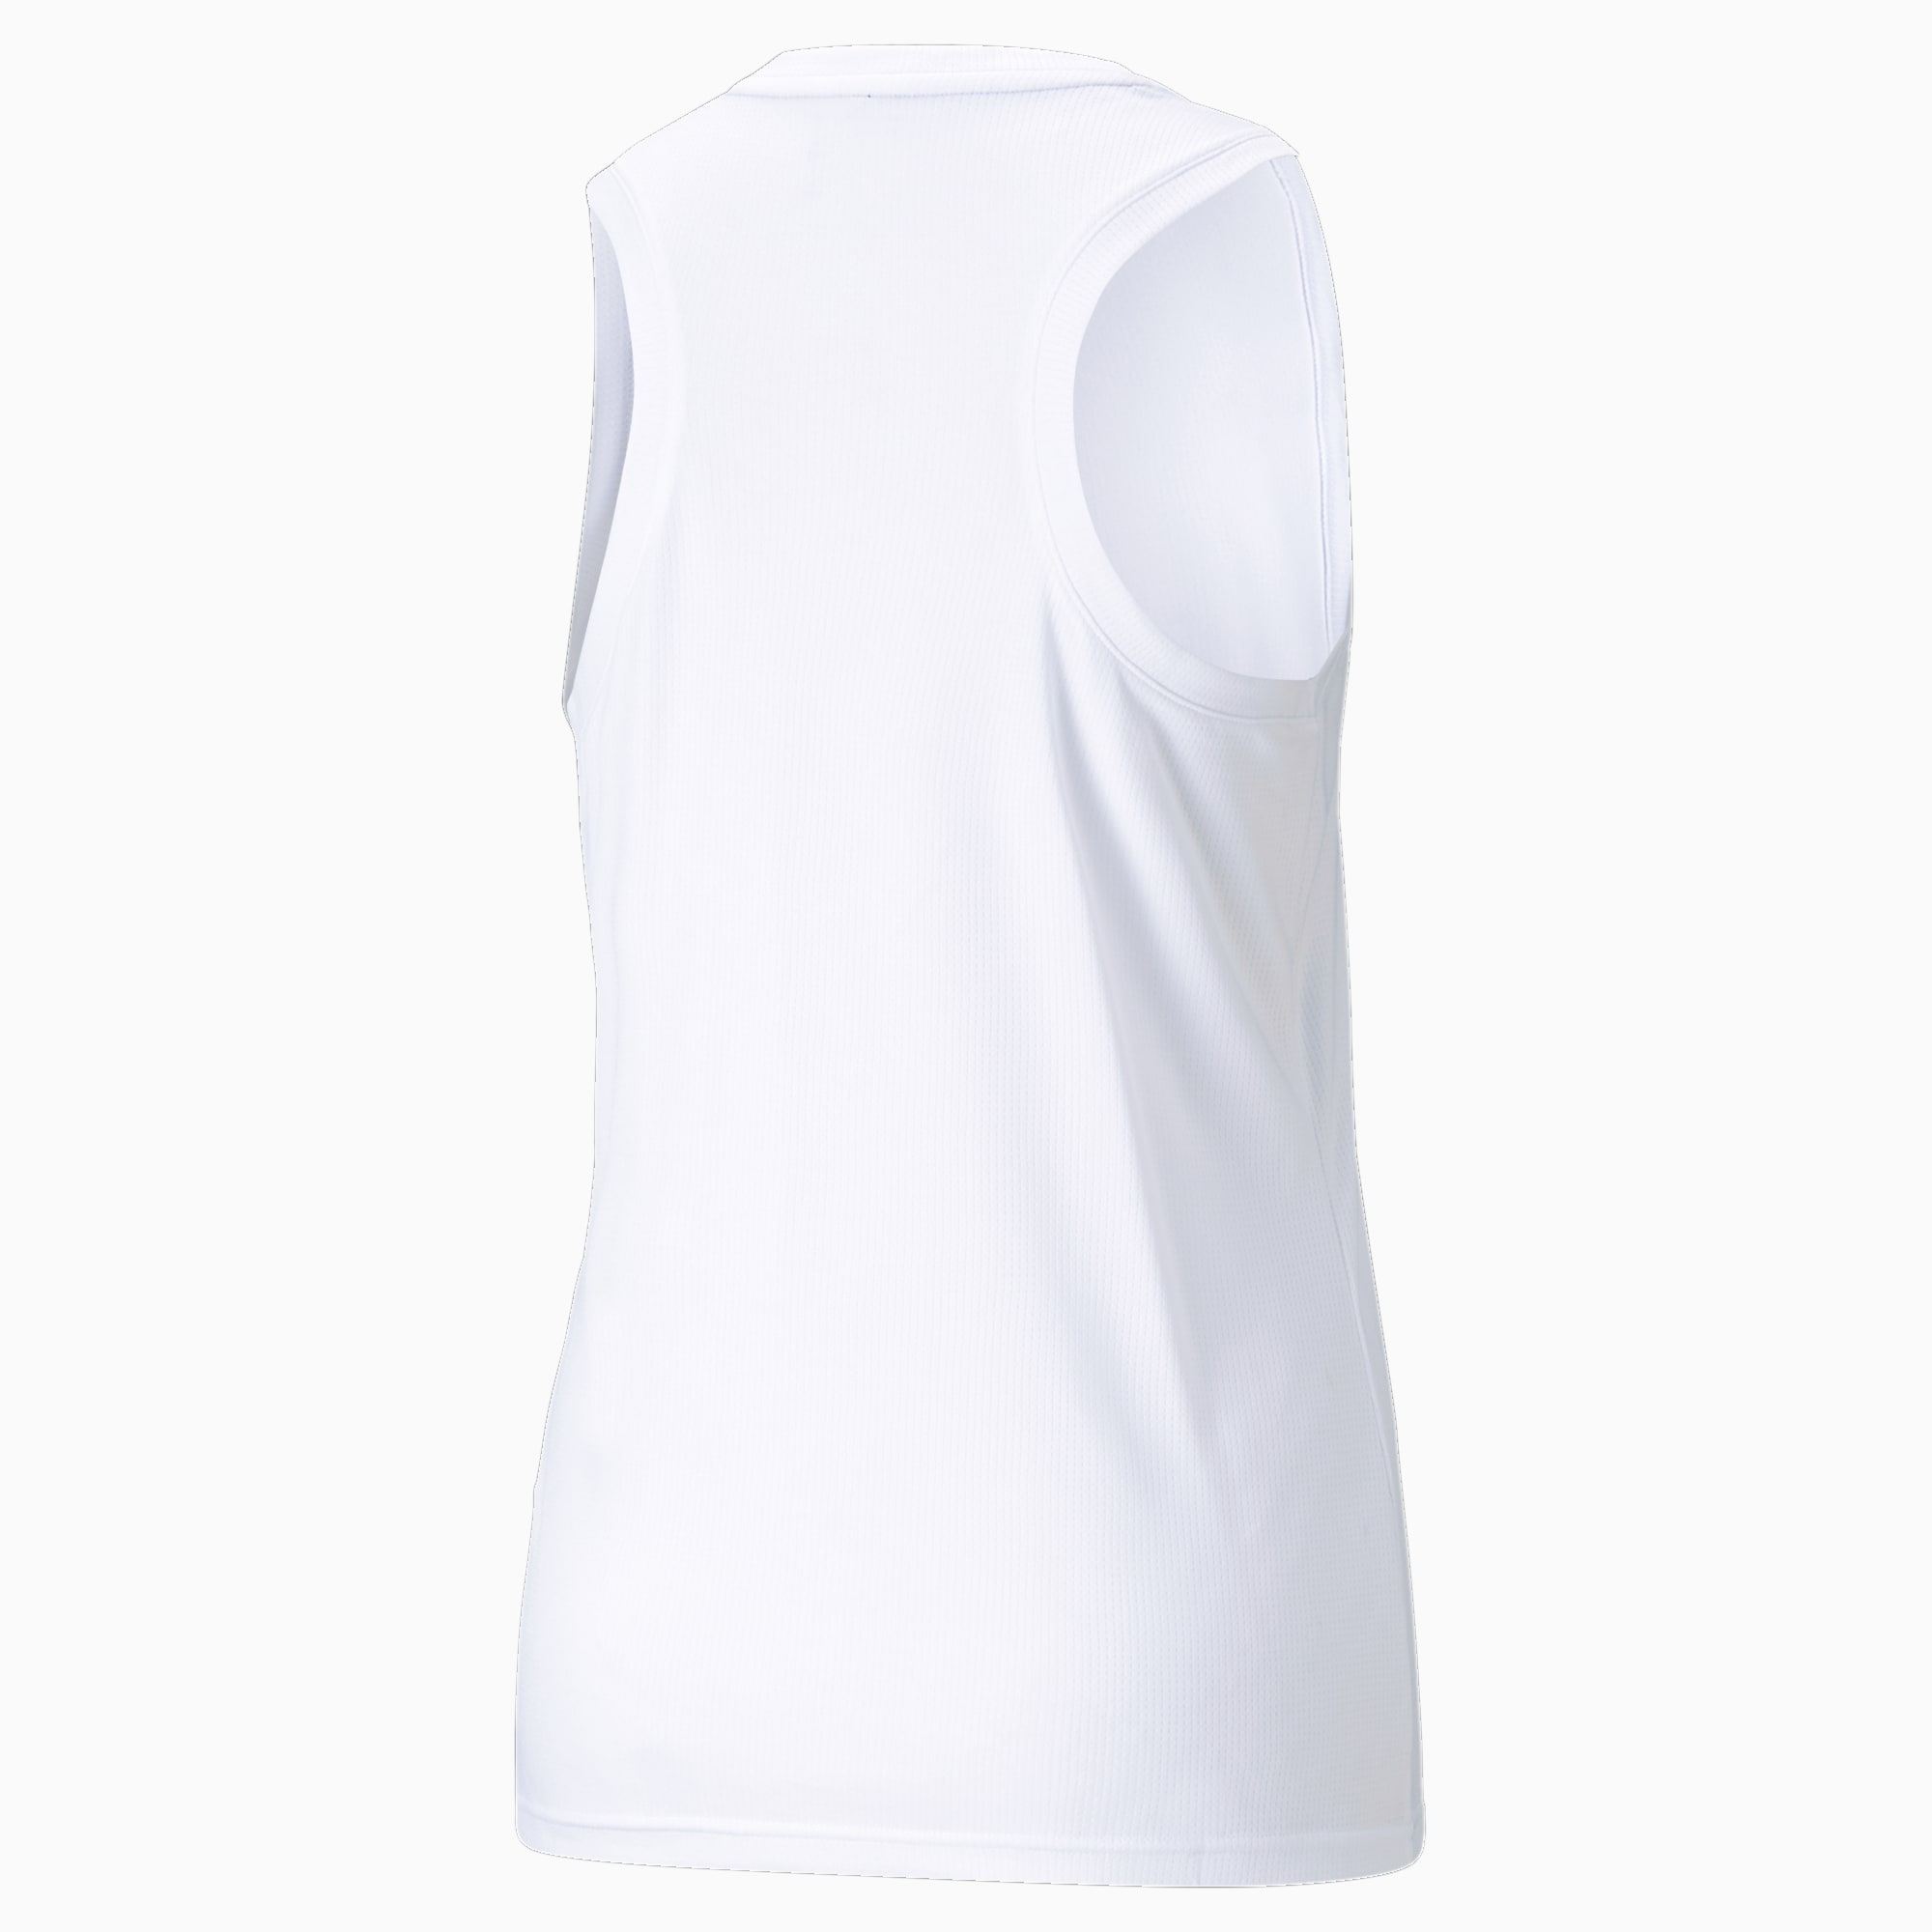 PUMA Performance Damen Trainings-Tank-Top, Weiß, Größe: XXL, Kleidung